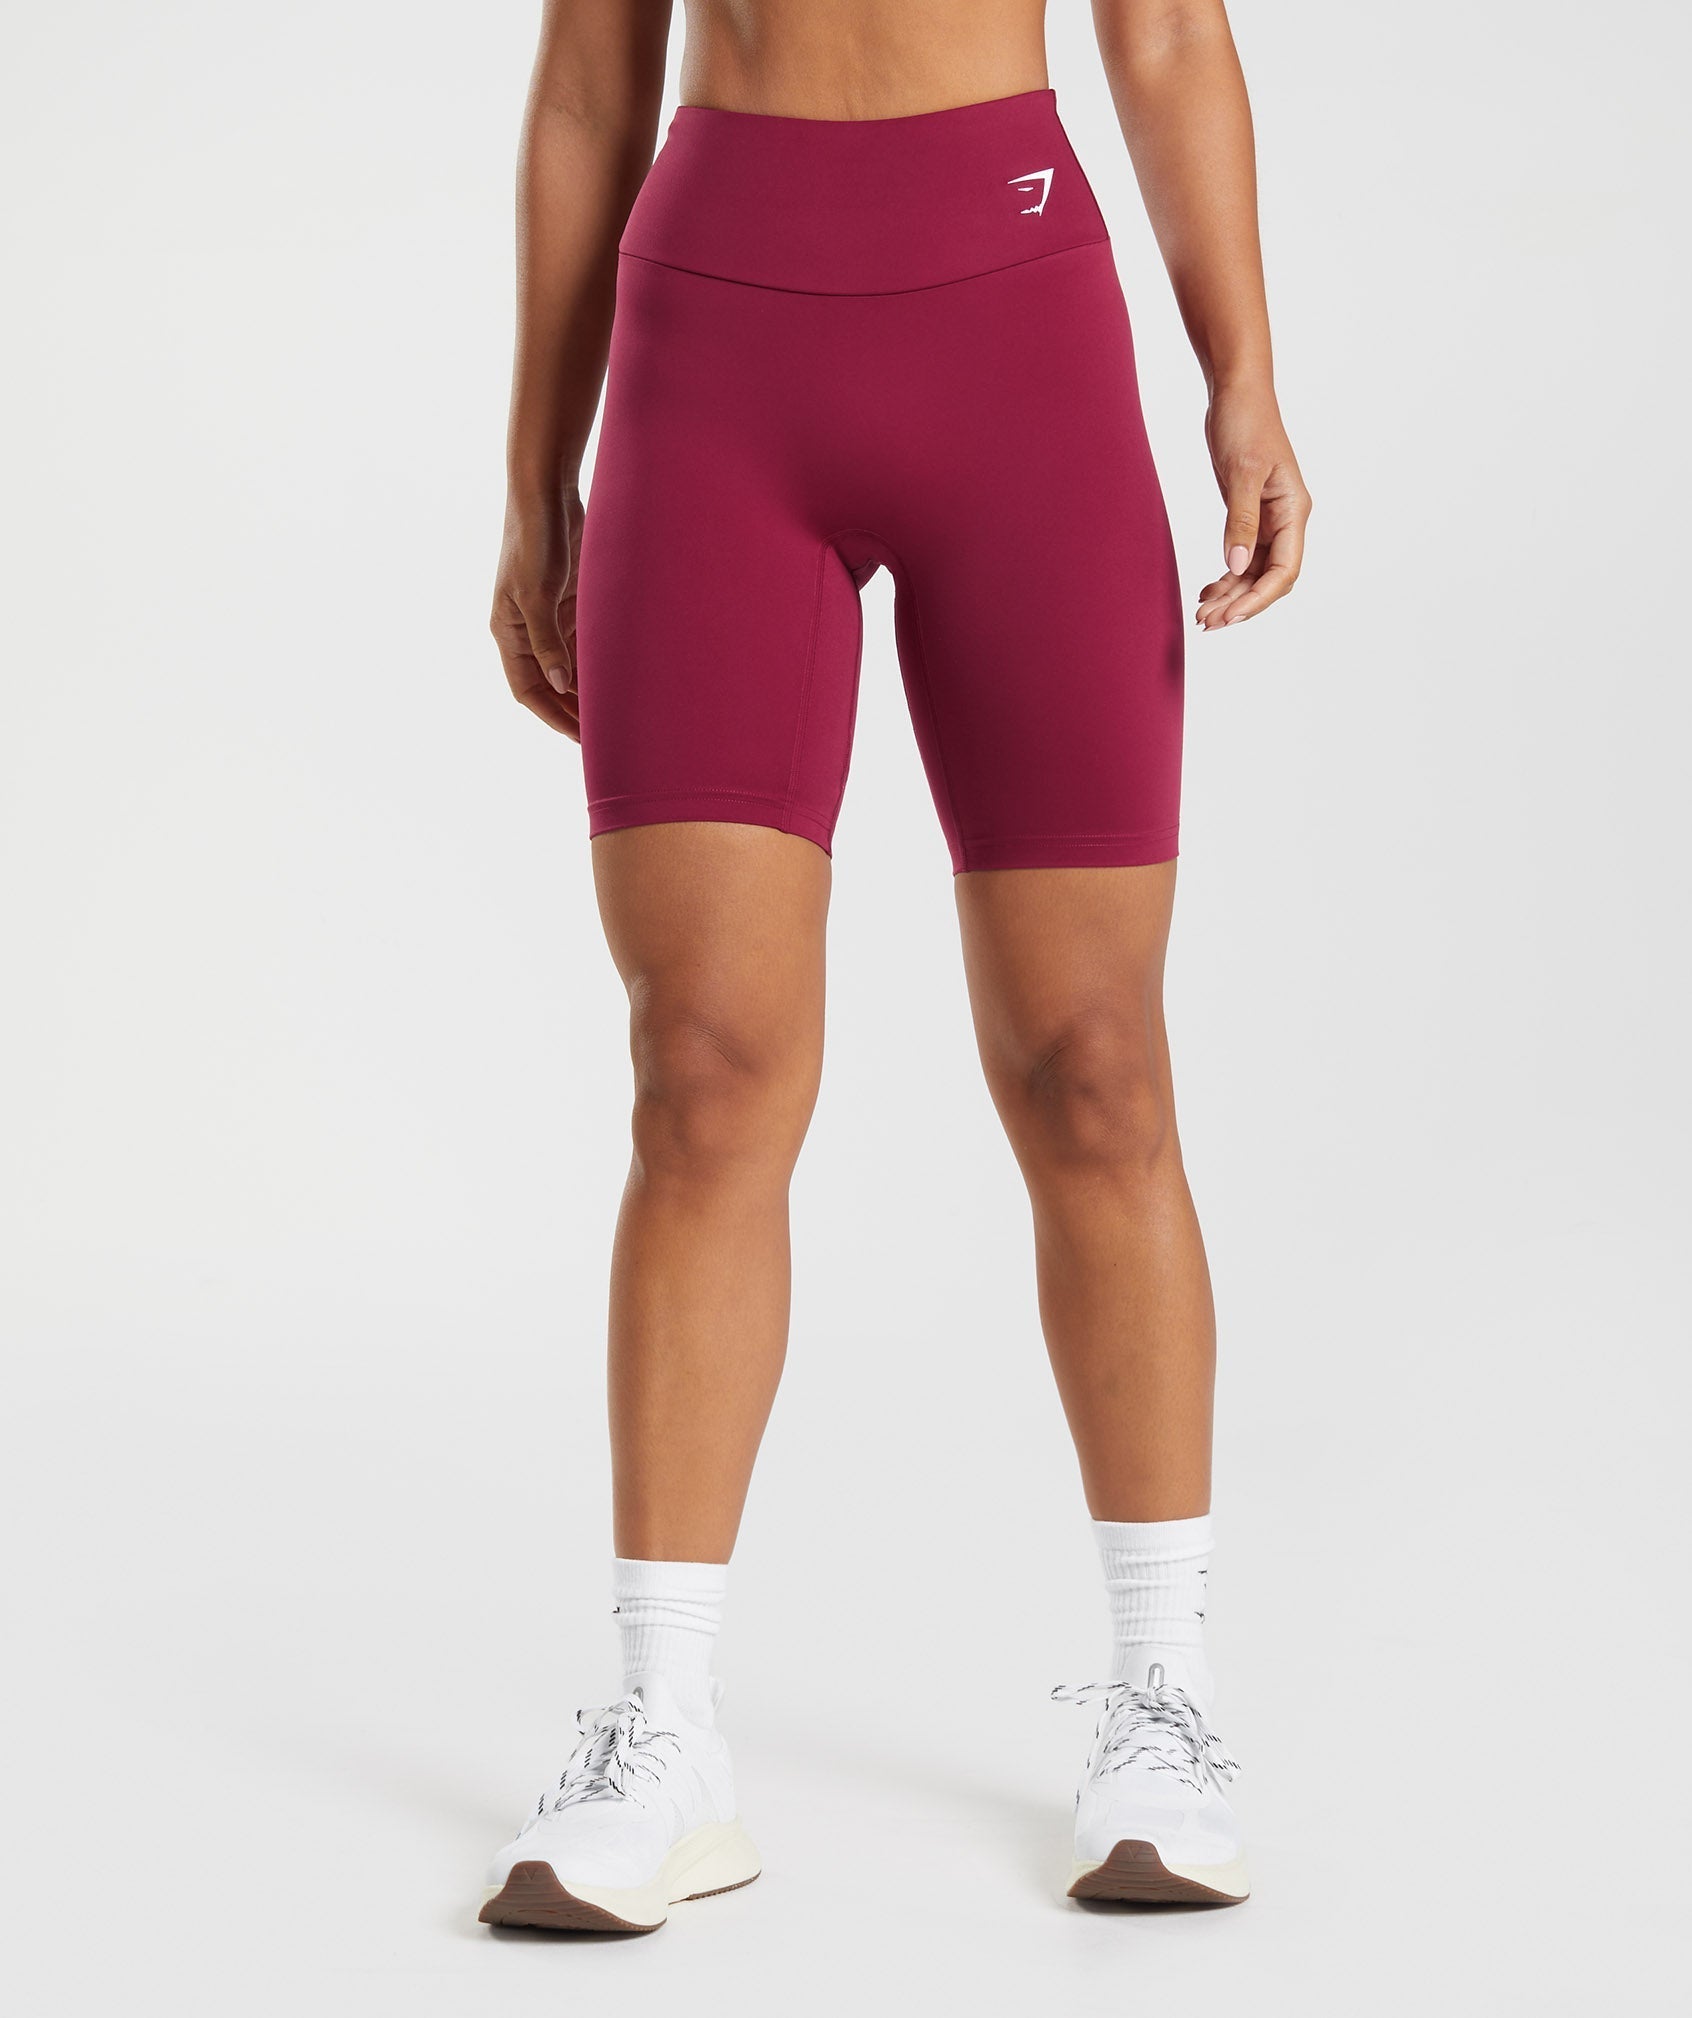 Training Cycling Shorts product image 1